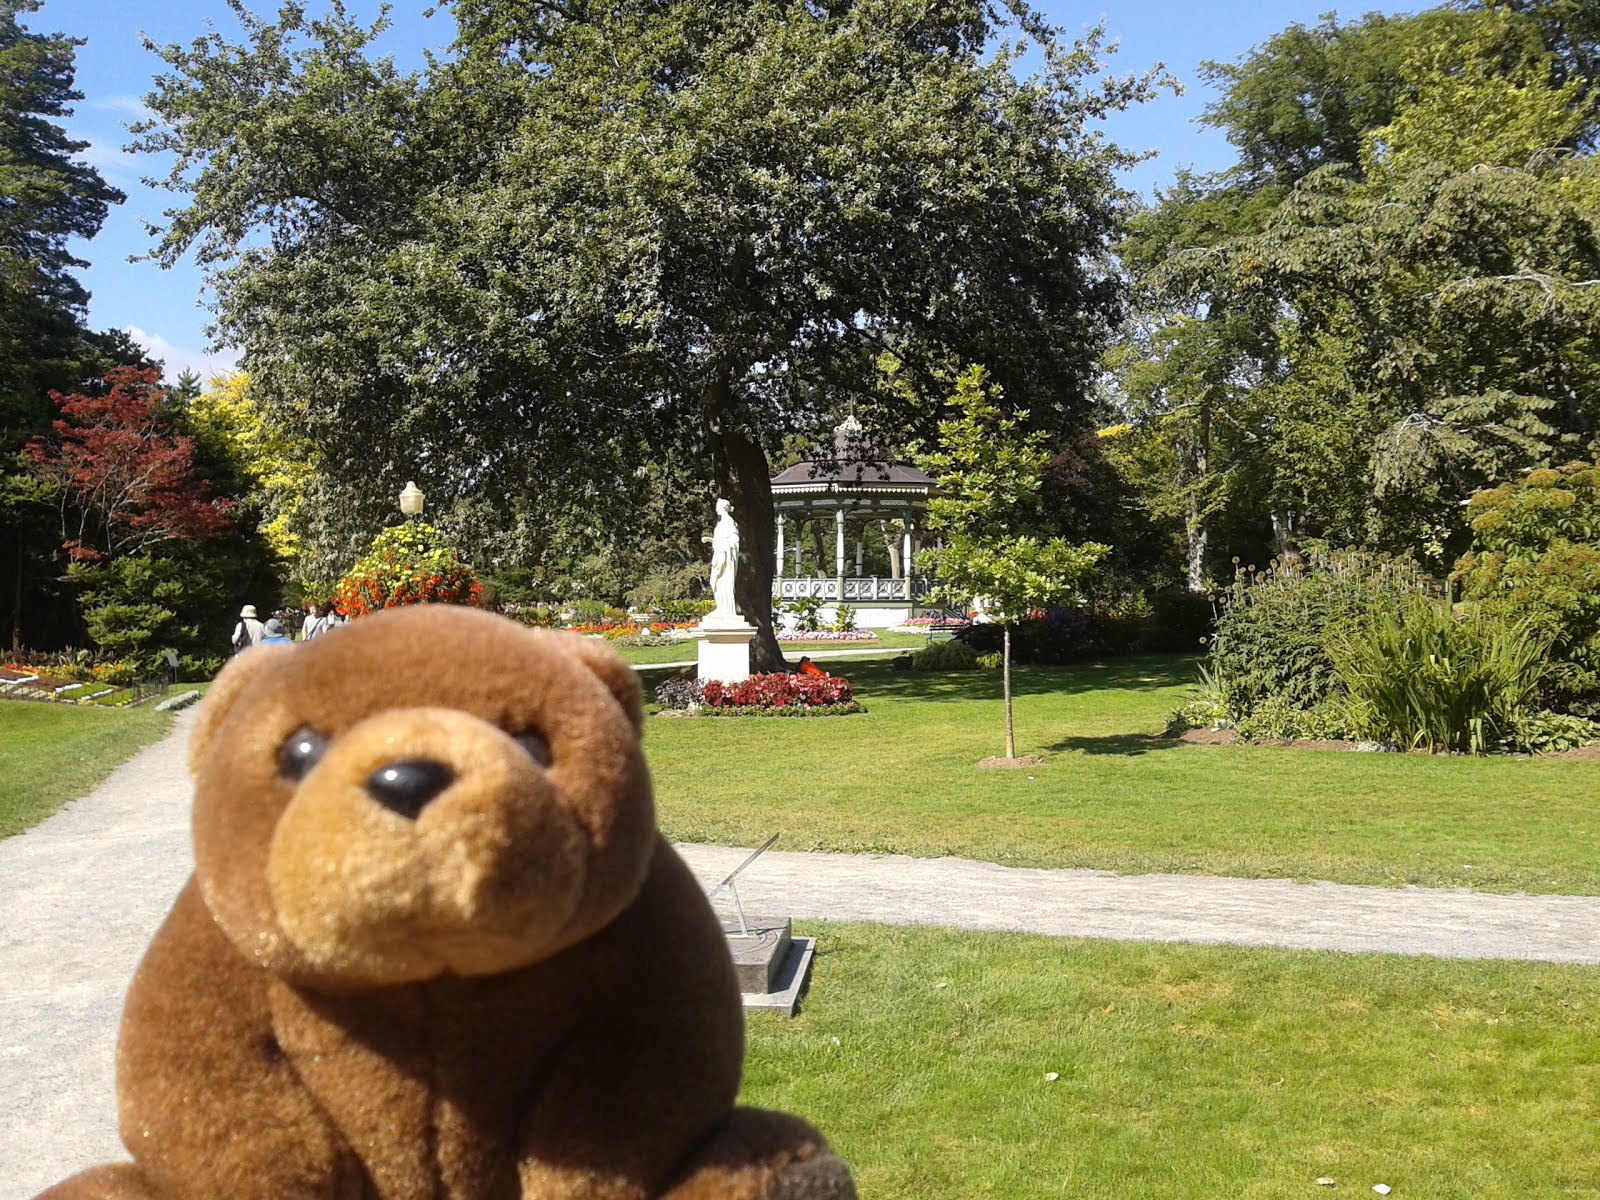 Teddy Garden in Halifax, Canada